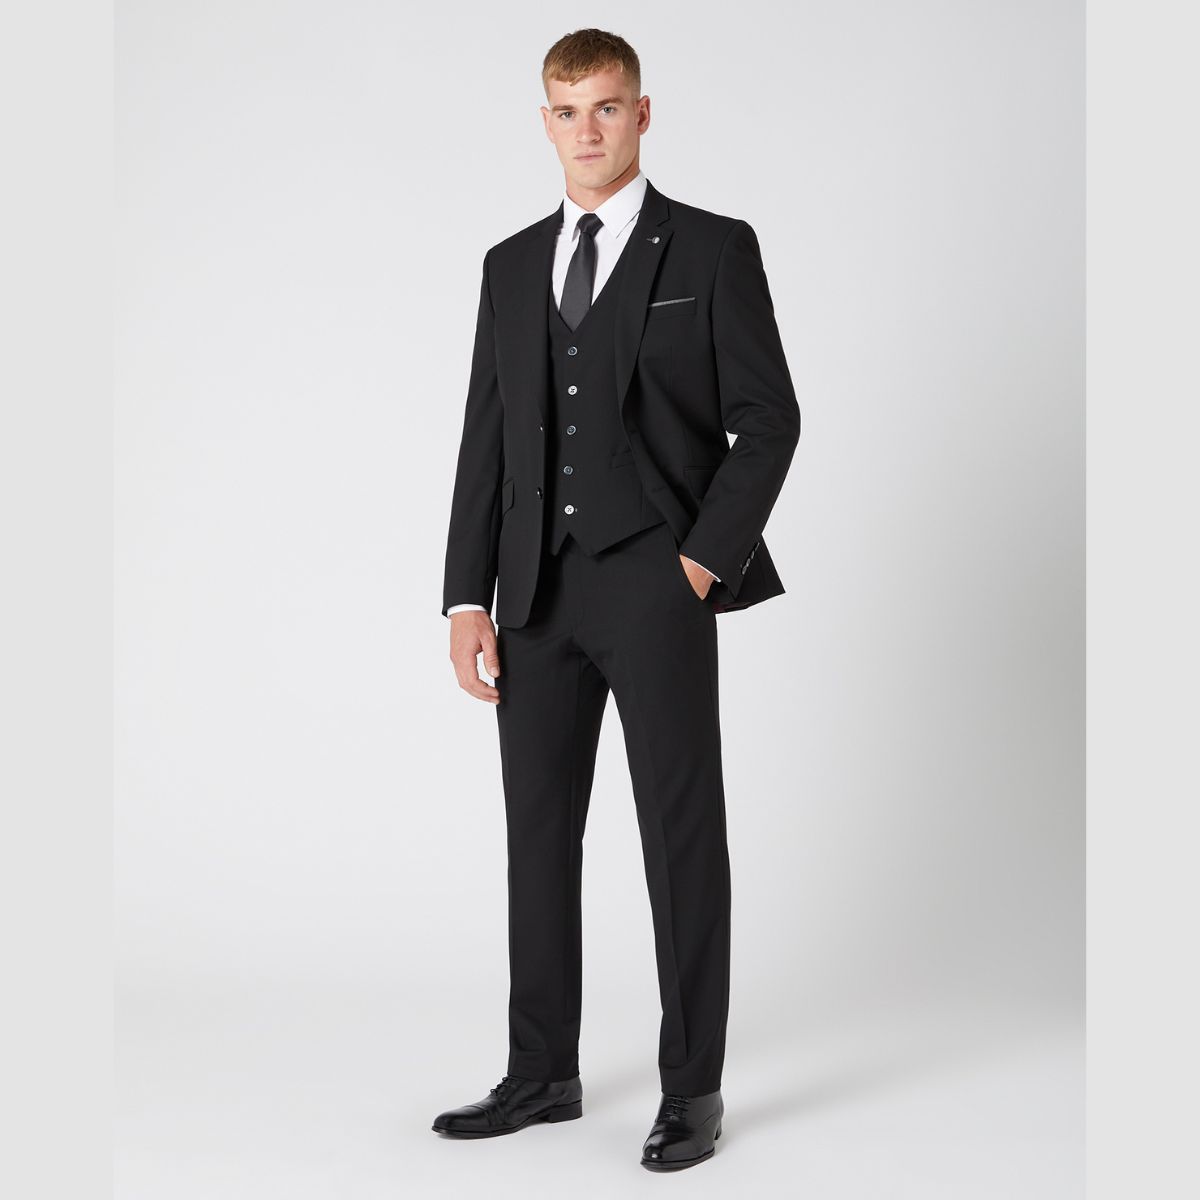 Remus Uomo Tapered Fit Suit Jacket - Black